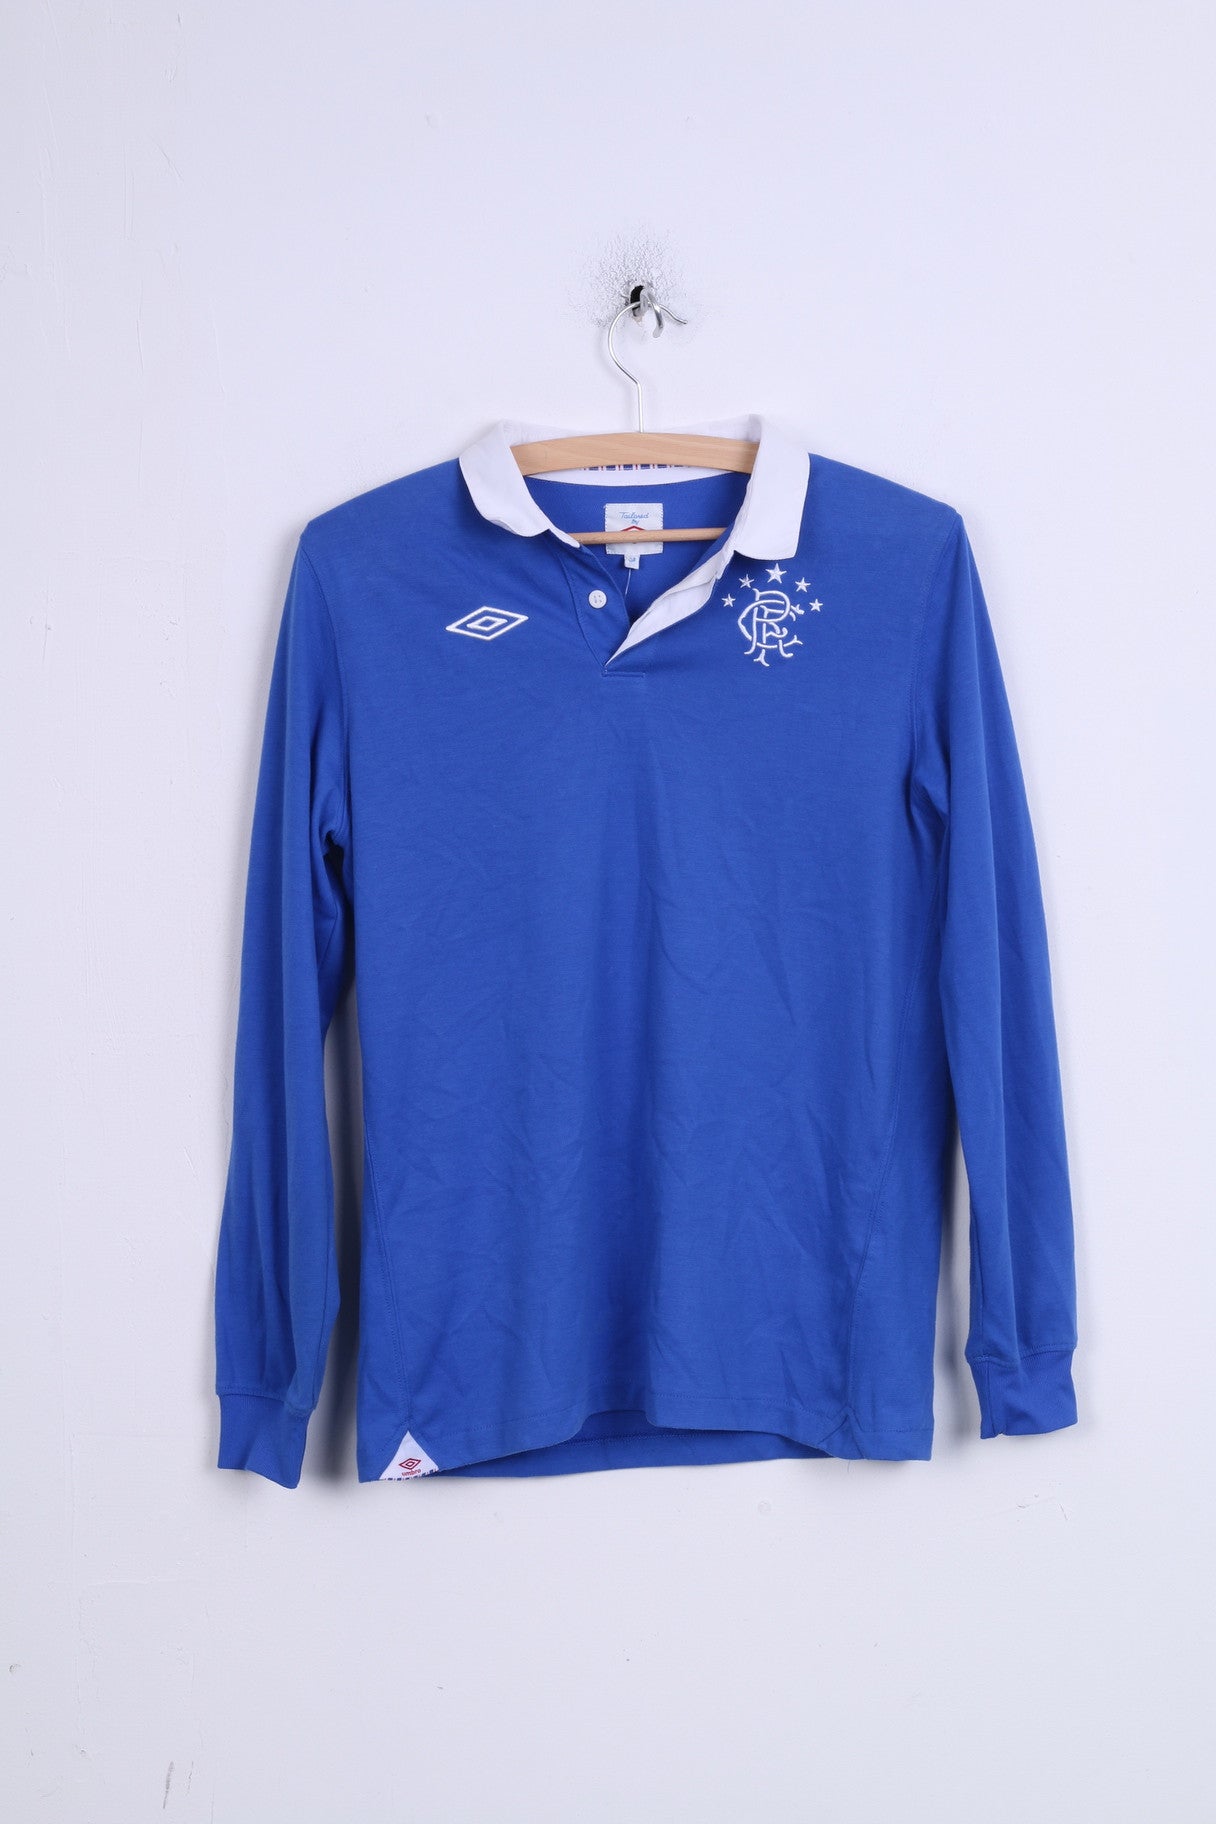 Umbro Boys 158 Long Sleeved Polo Shirt Blue Glasgow Rangers Football Club